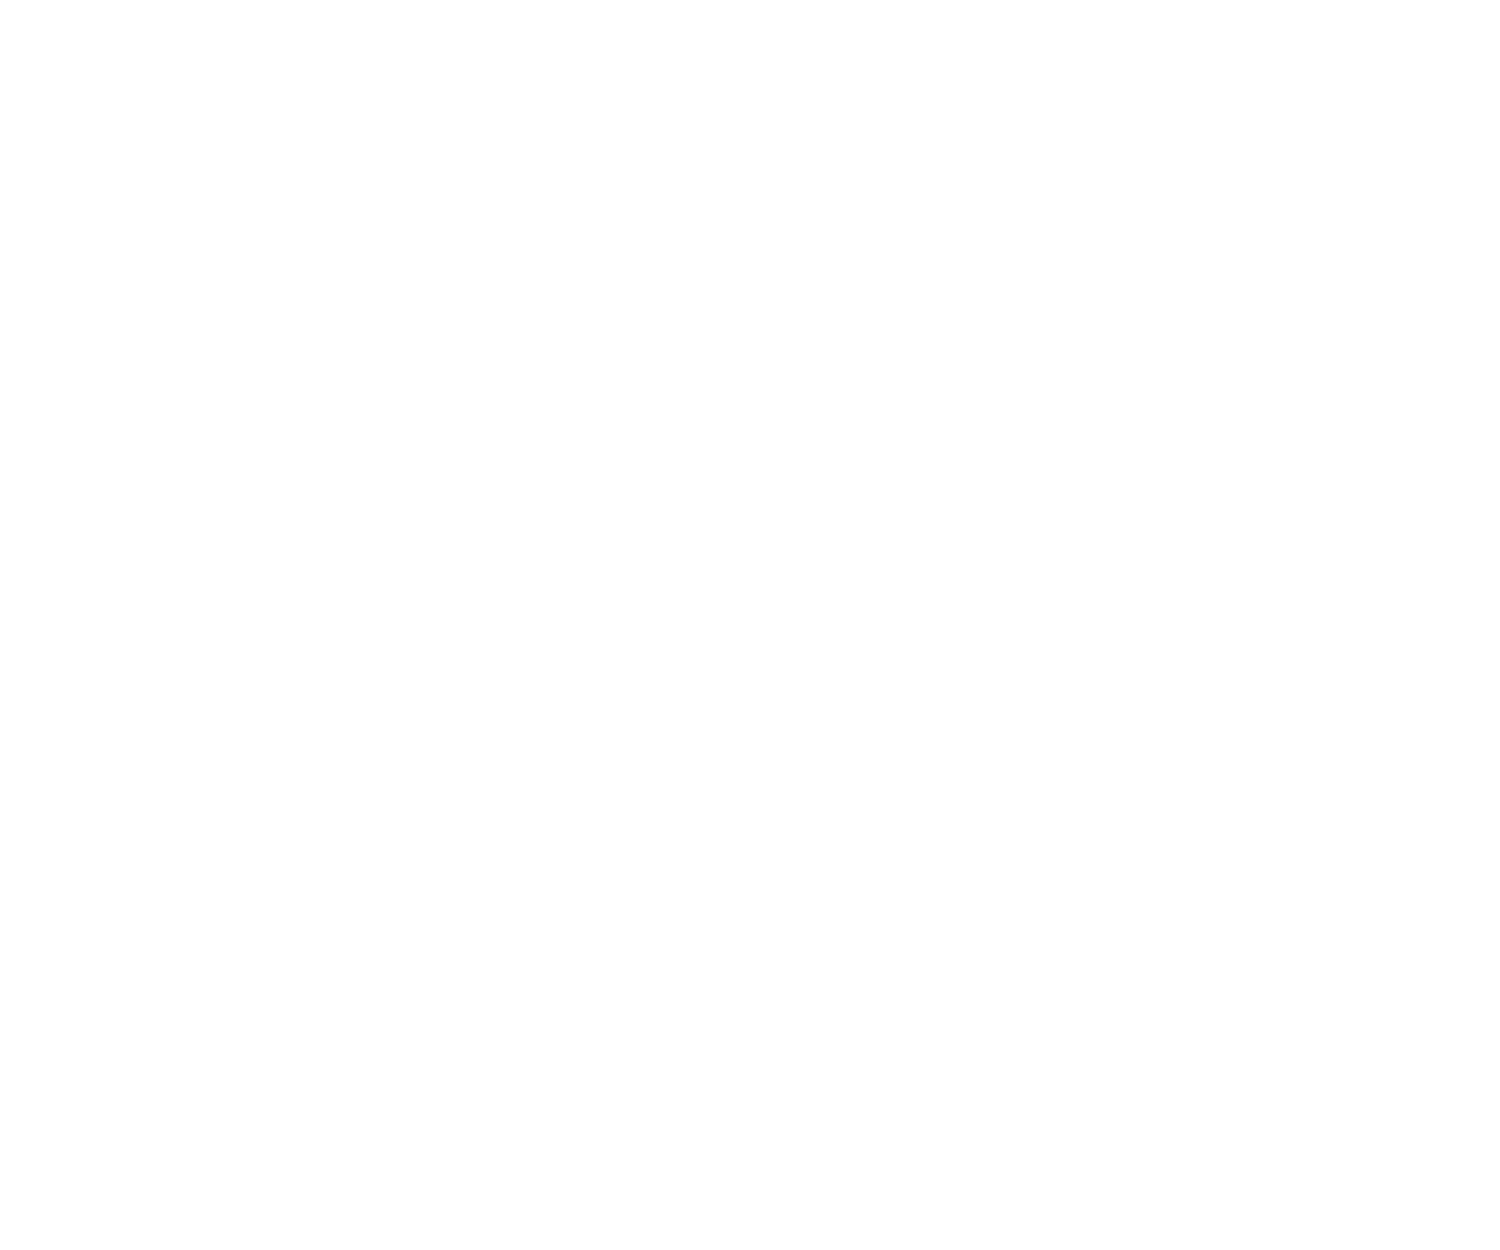 Treehouse Global Ventures